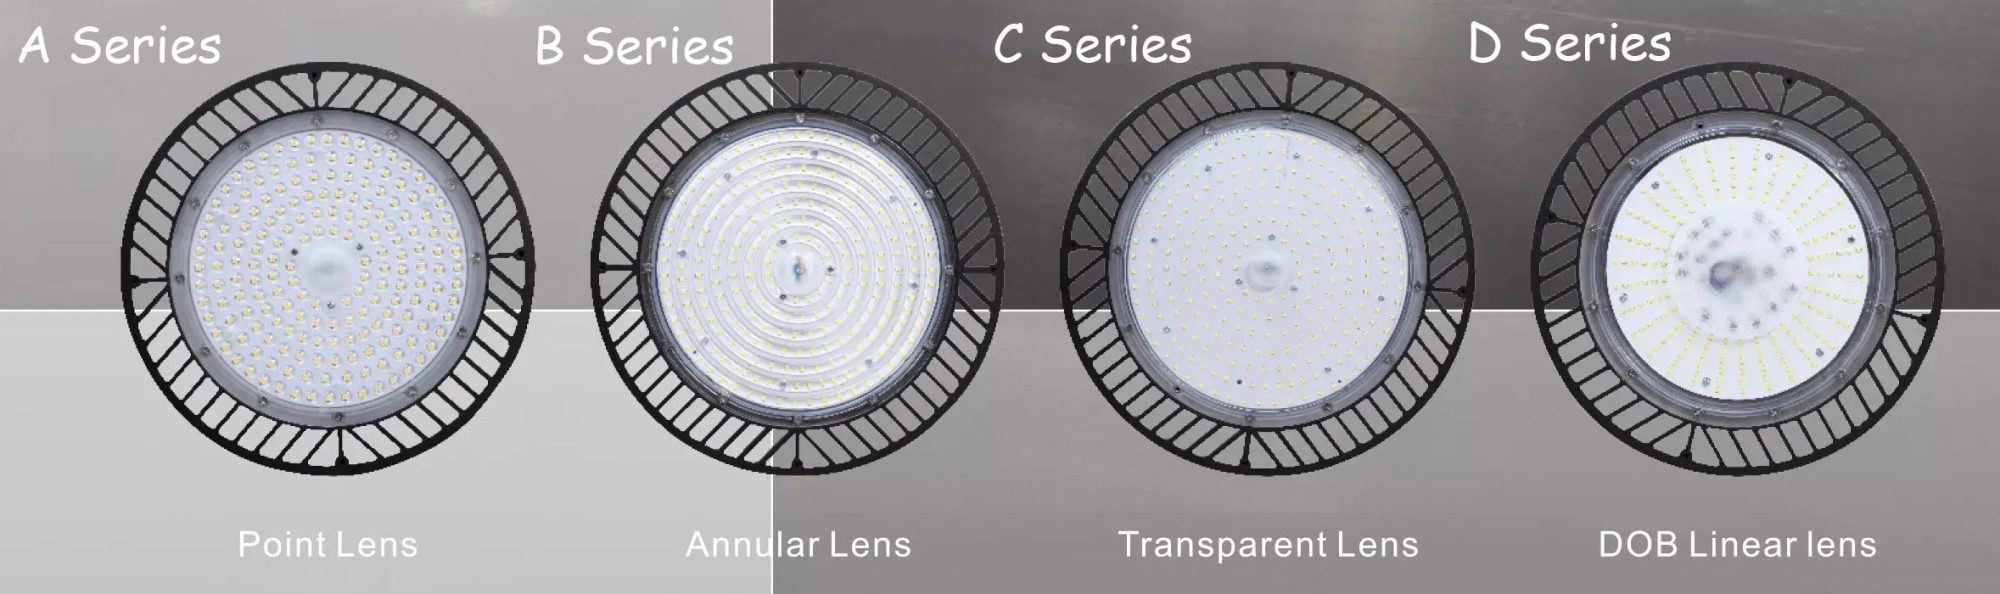 LED High Bay Light Optical Lens Options